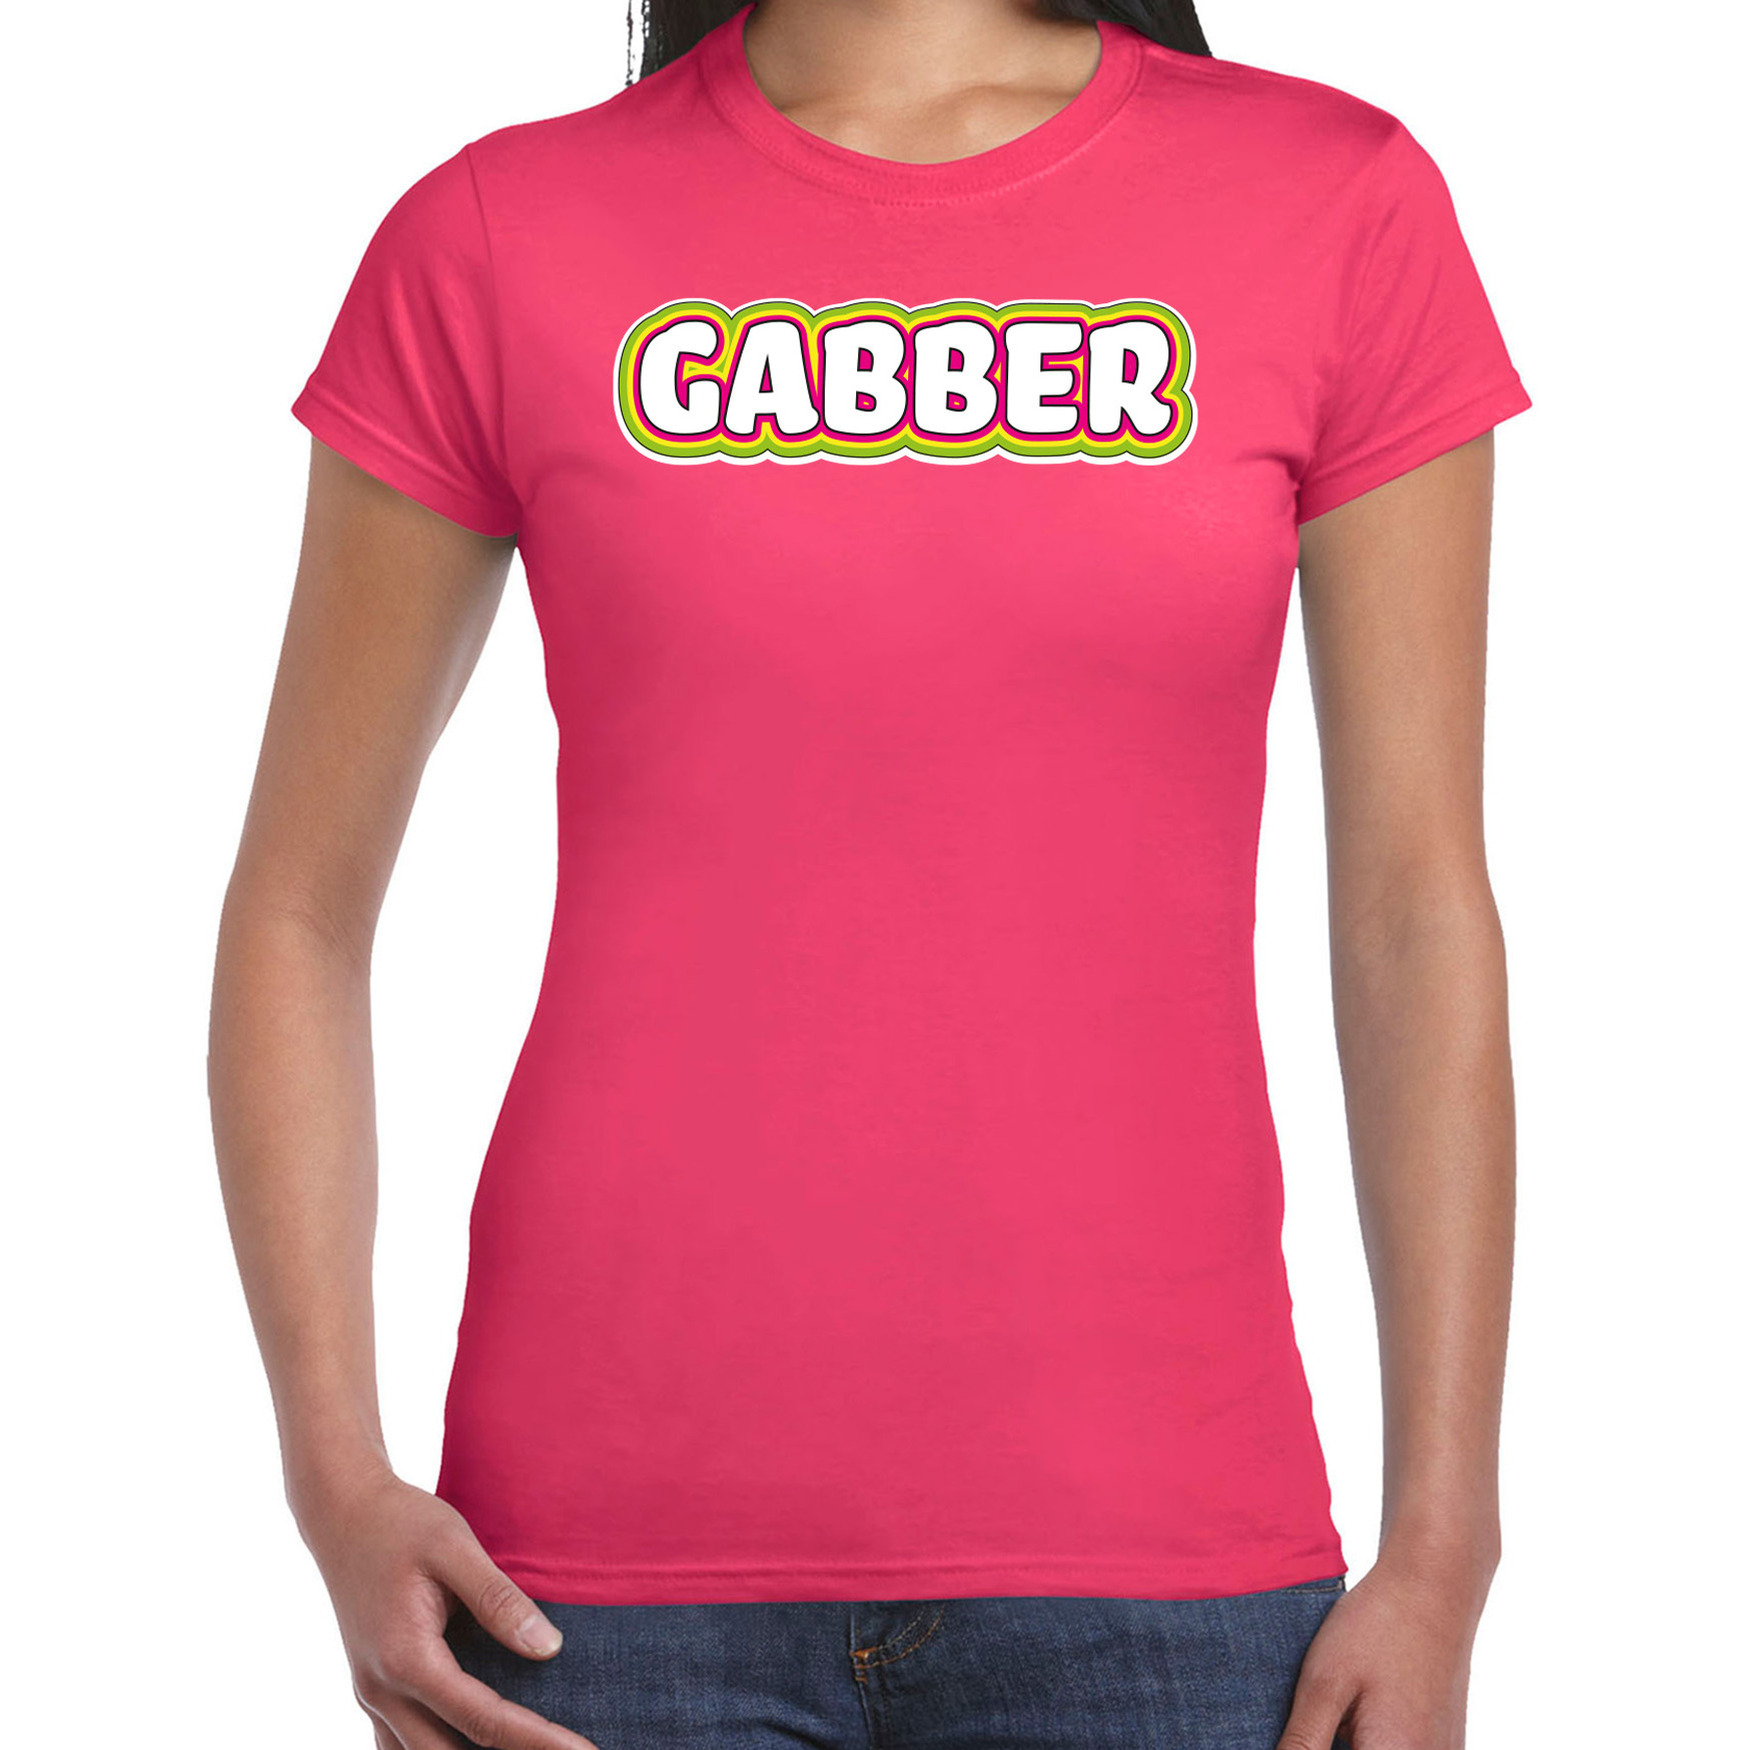 Verkleed t-shirt voor dames gabber roze foute party-carnaval vriend-maat muziek